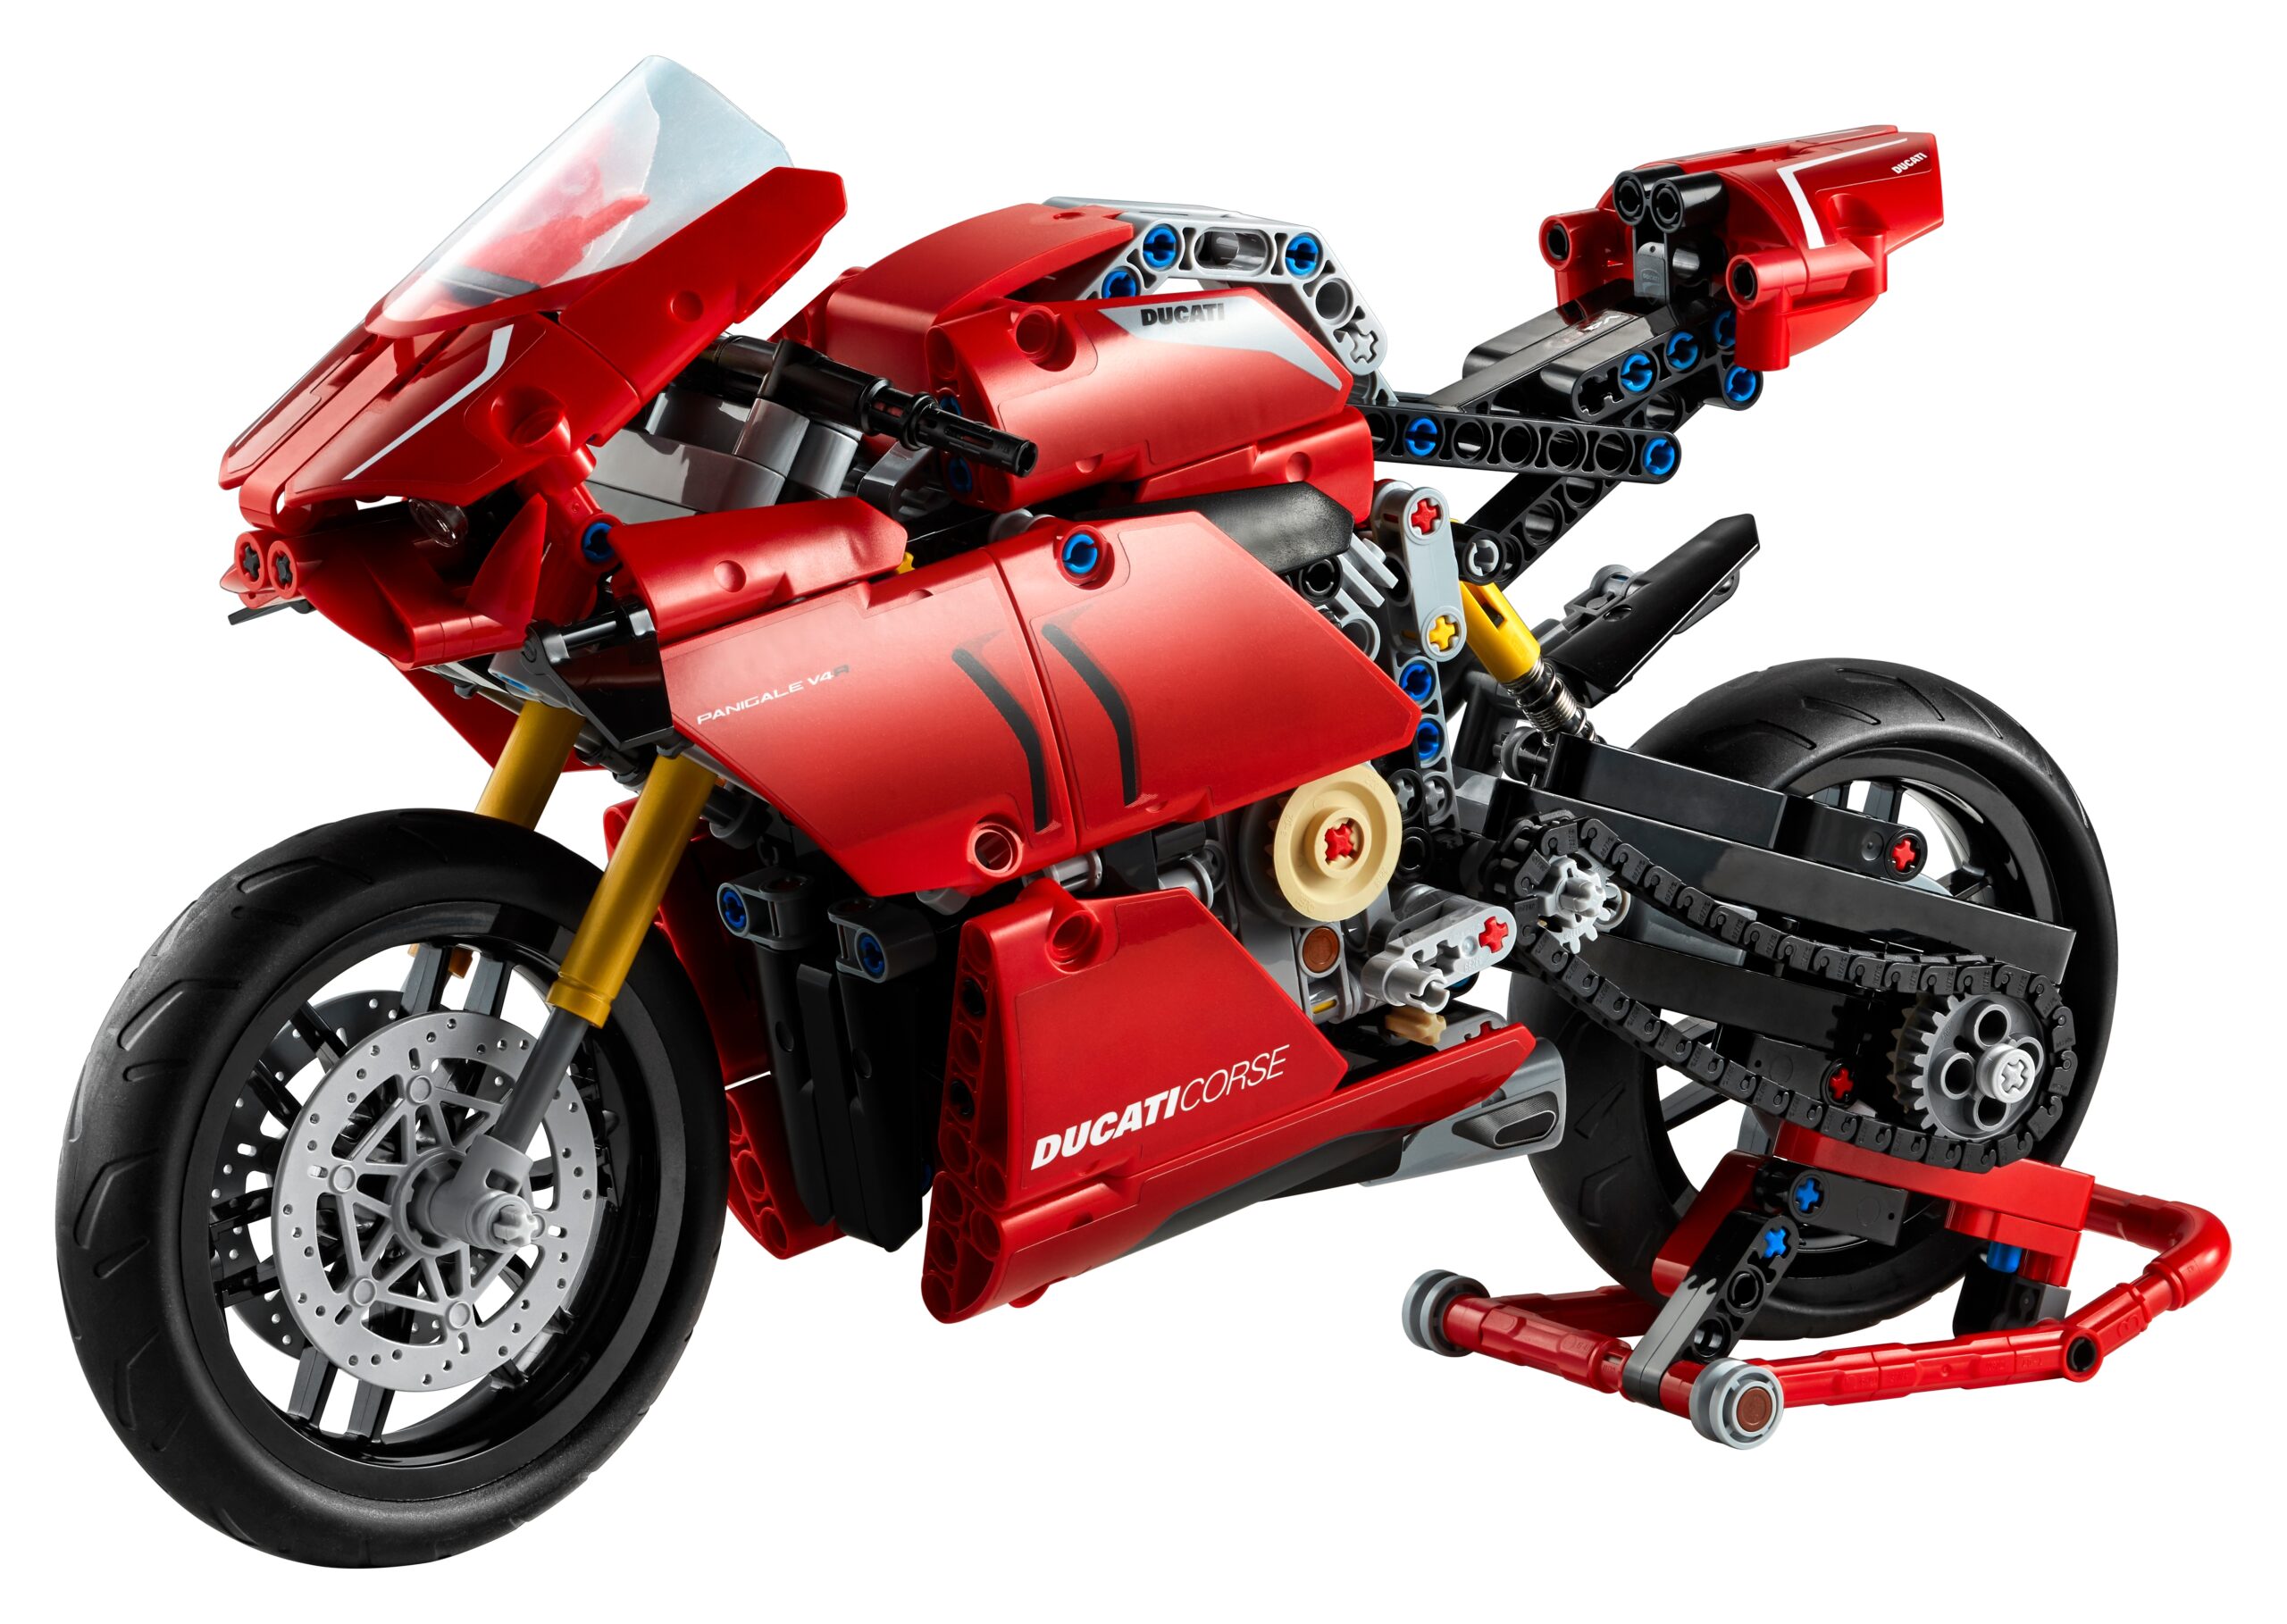 LEGO Kawasaki Ninja H2R motorcycle 42170 Technic (Pre-Order